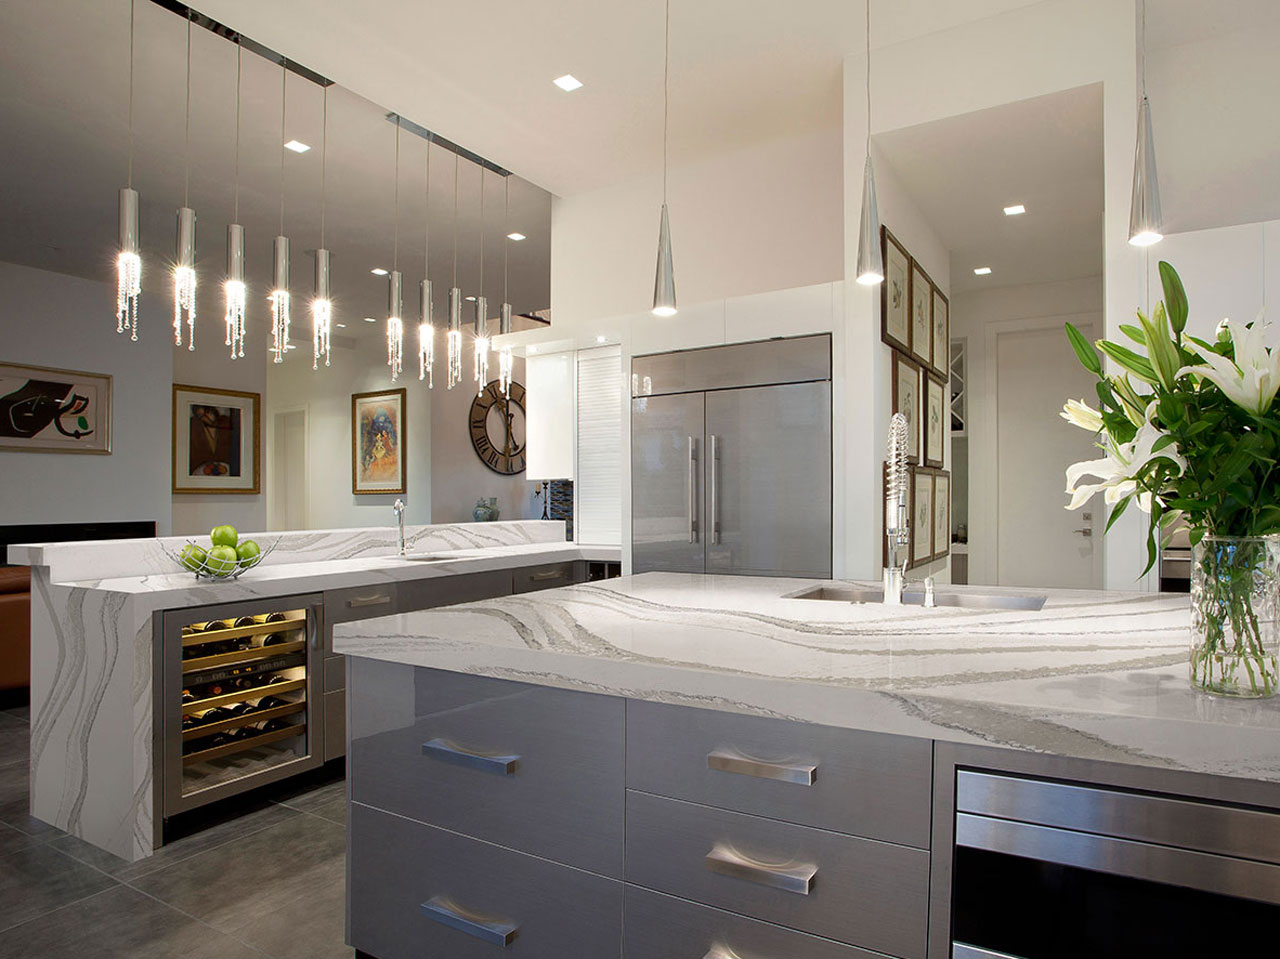 design for living kitchen and bath center